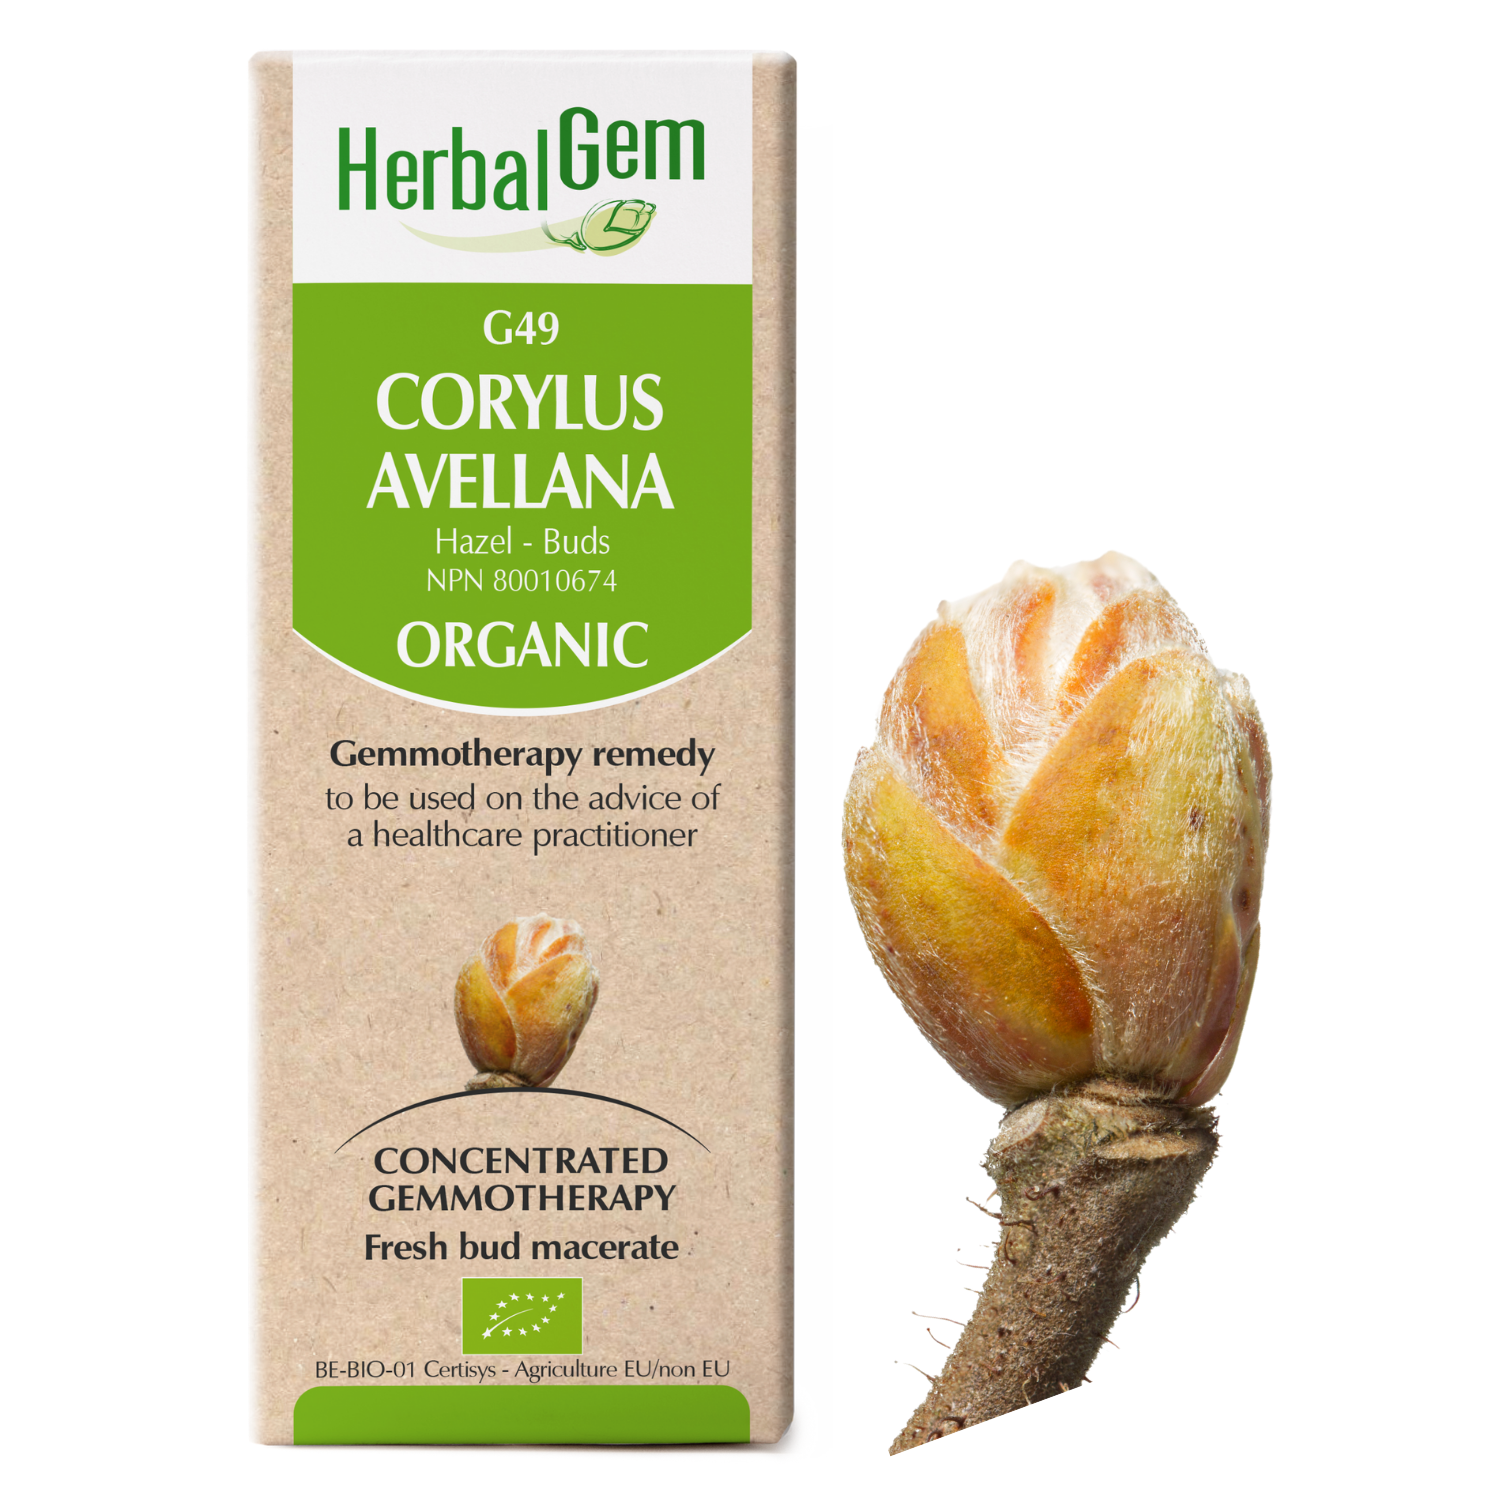 G49 Corylus avellana Gemmotherapy remedy Organic  Hazel Buds